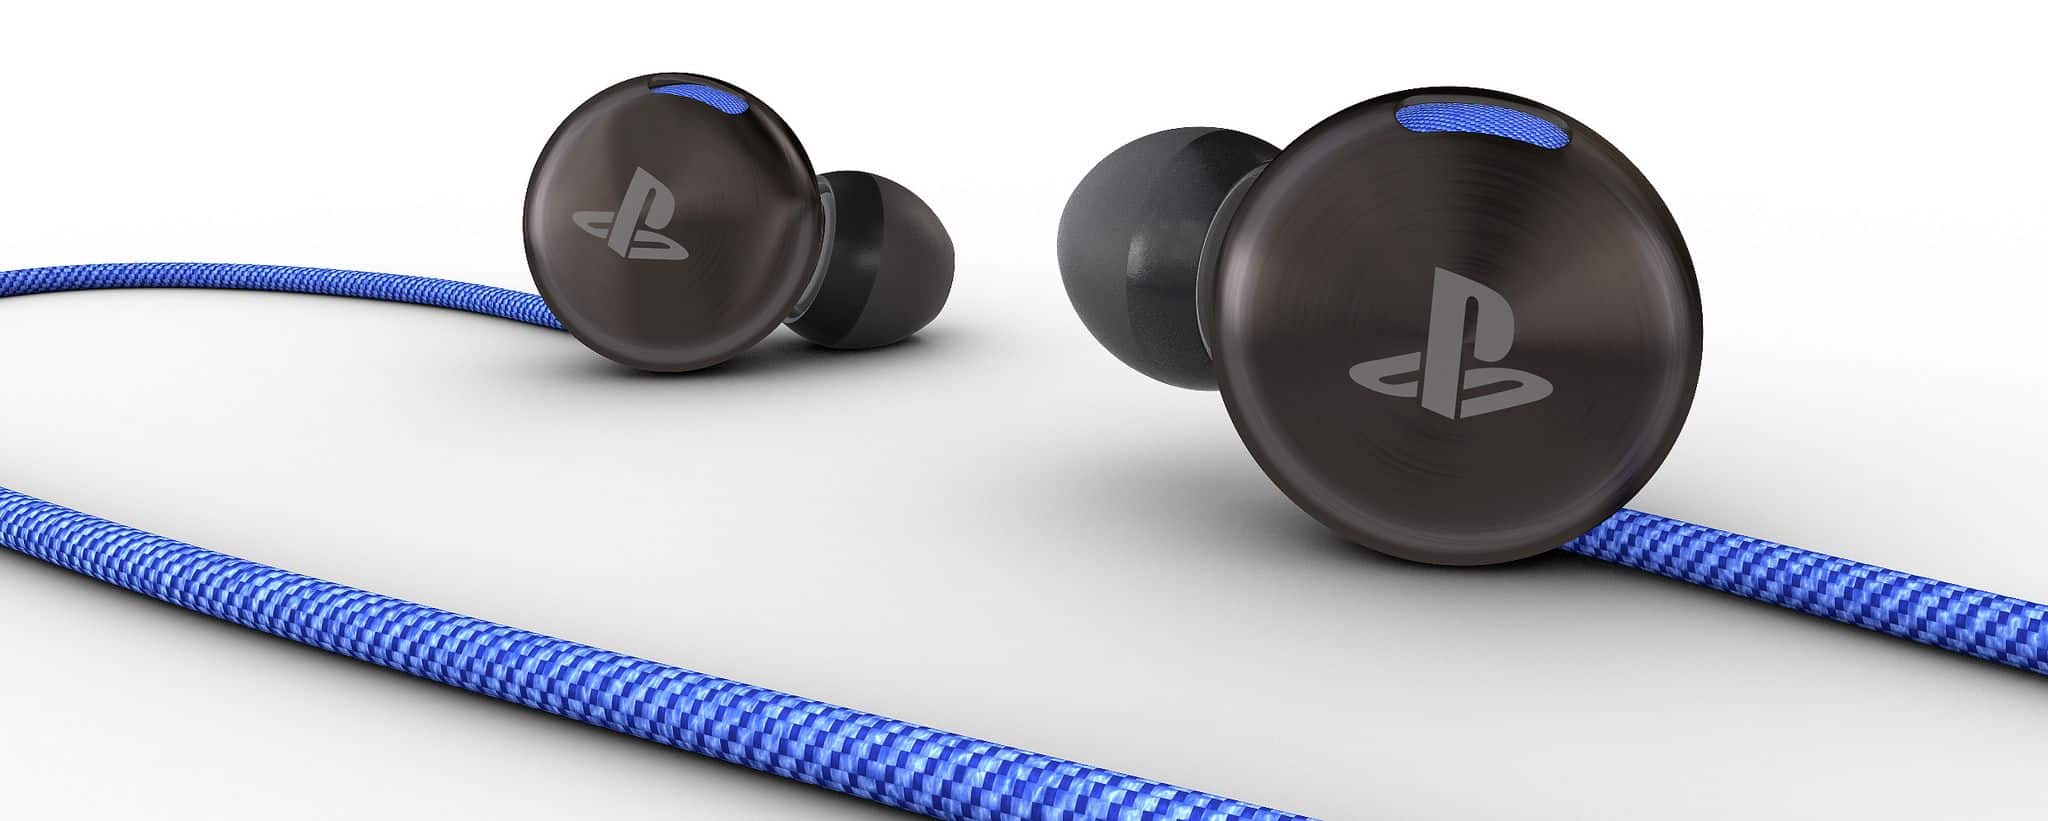 Sony PS4 headset